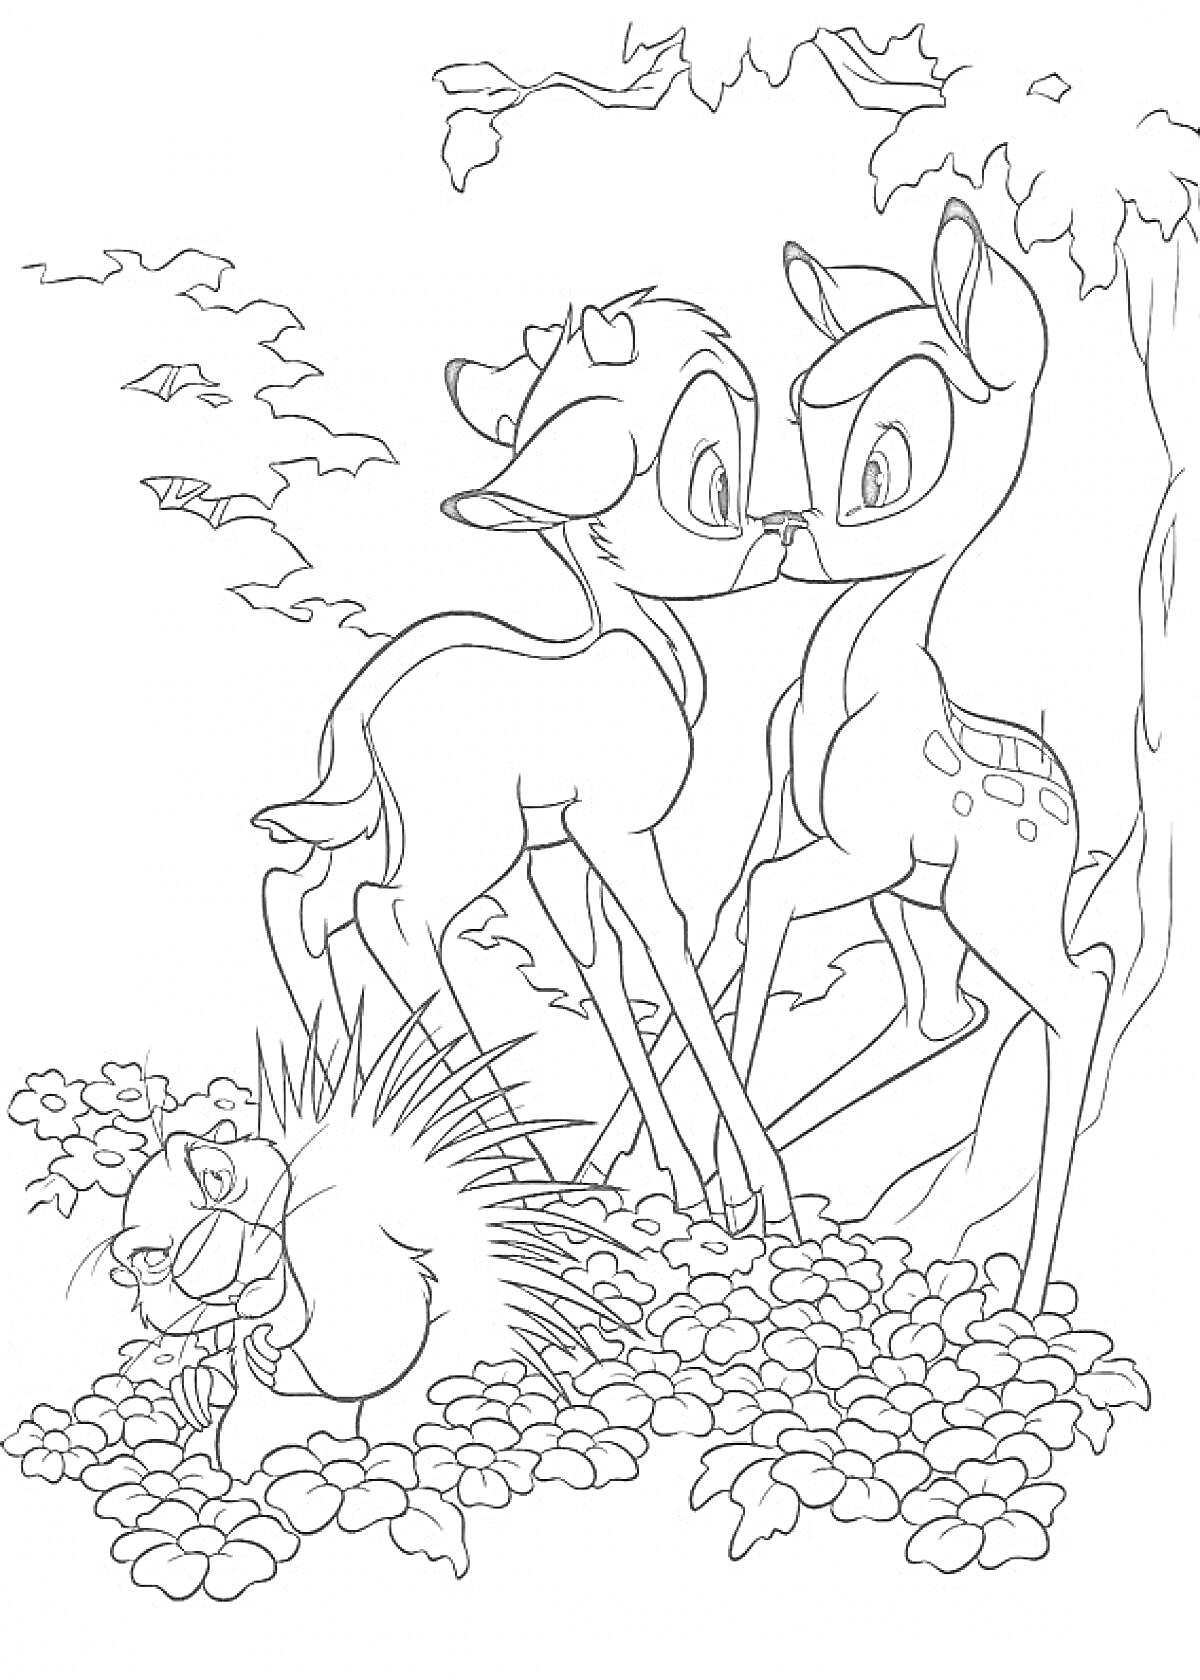 Бэмби и его друг среди леса, с енотом на поляне